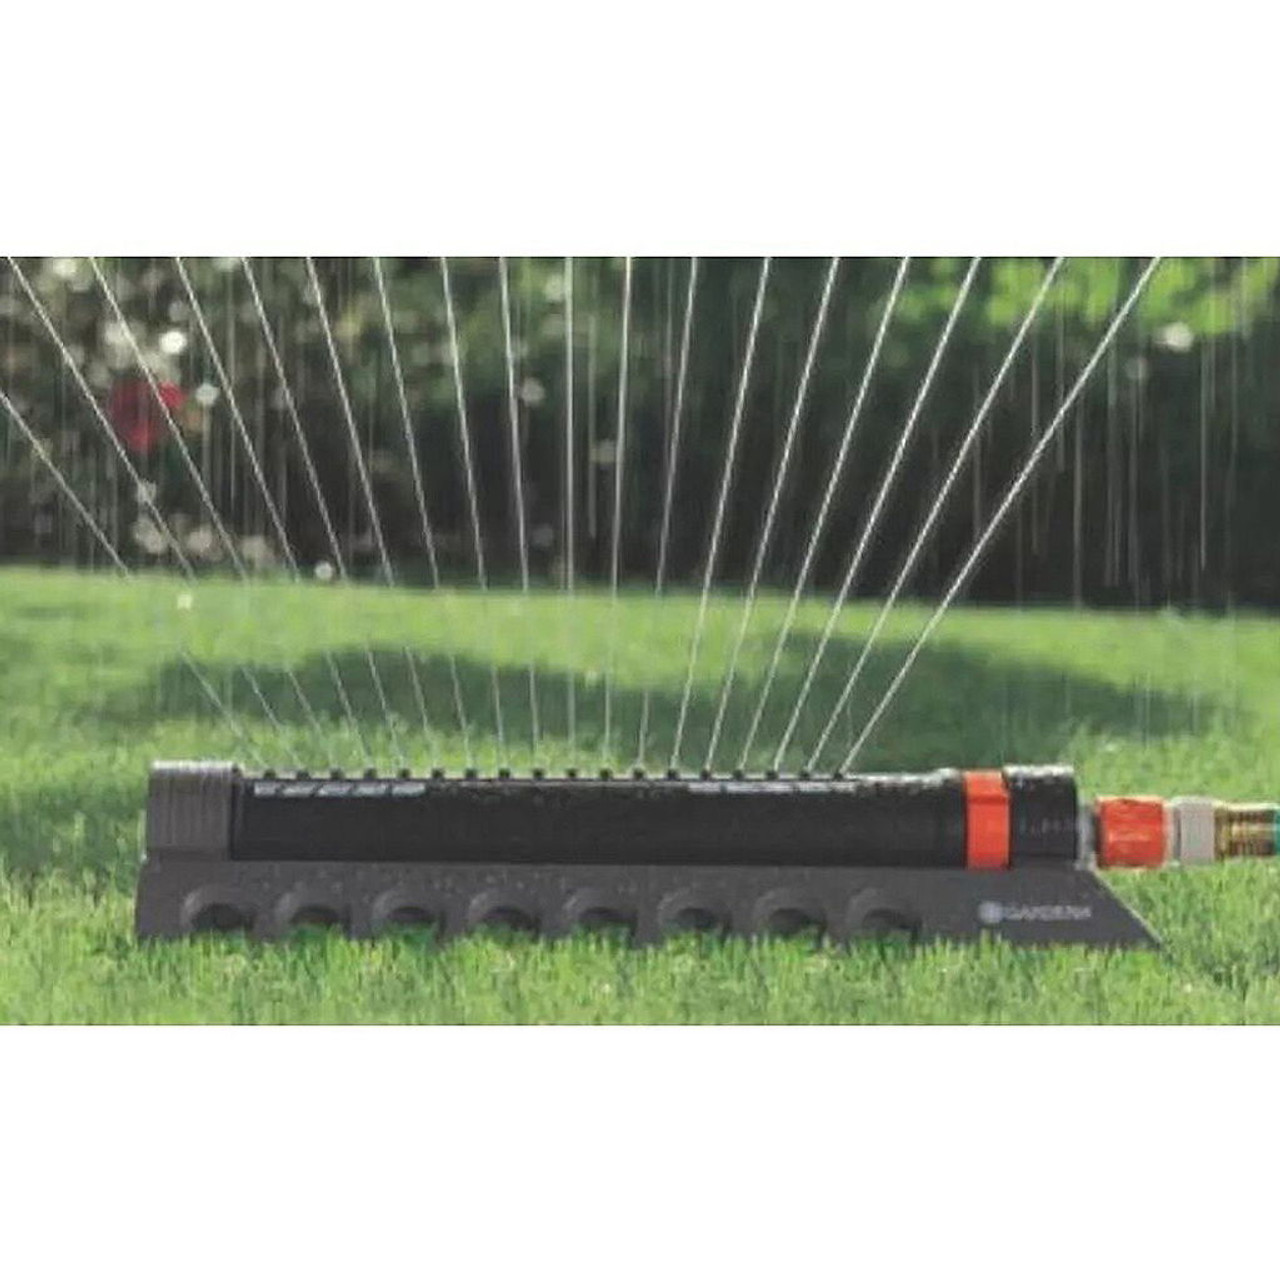 Gardena Aqua Zoom Adjusting Oscillating Sprinkler